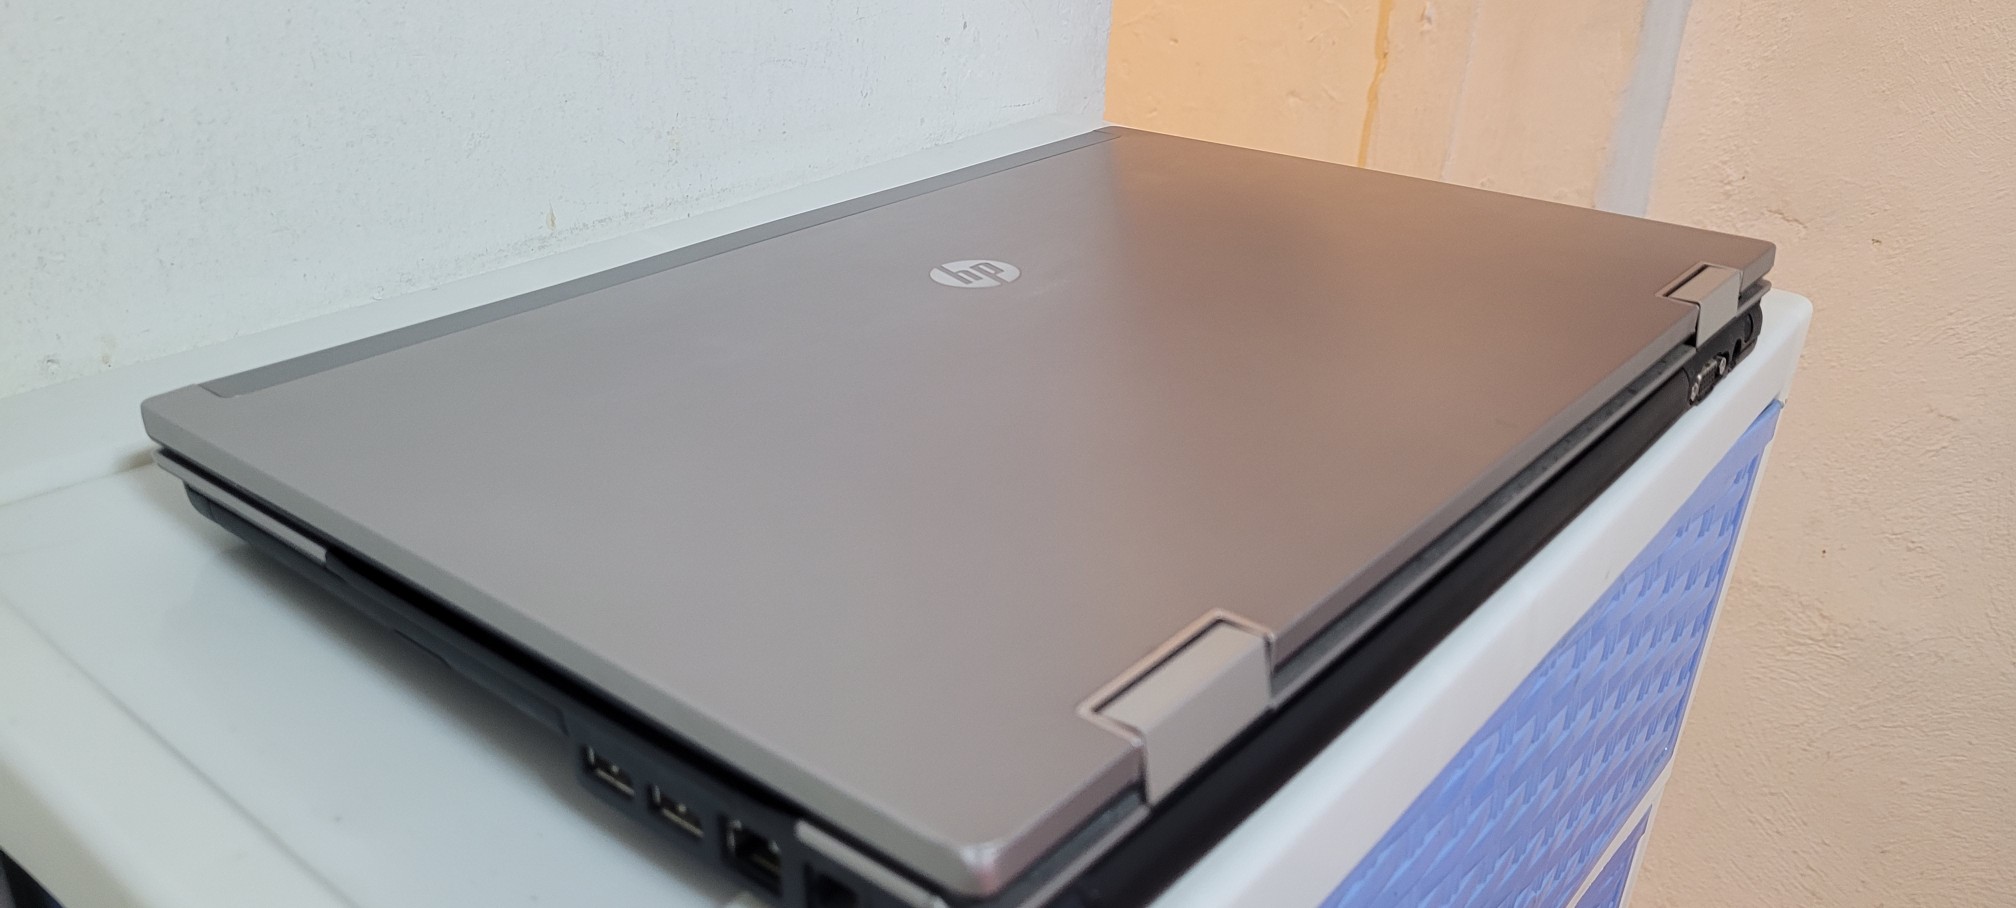 computadoras y laptops - Hp Elitebook 17 Pulg Core i7 Ram 8gb SSD 128GB Nvidea 4gb Disponible 2